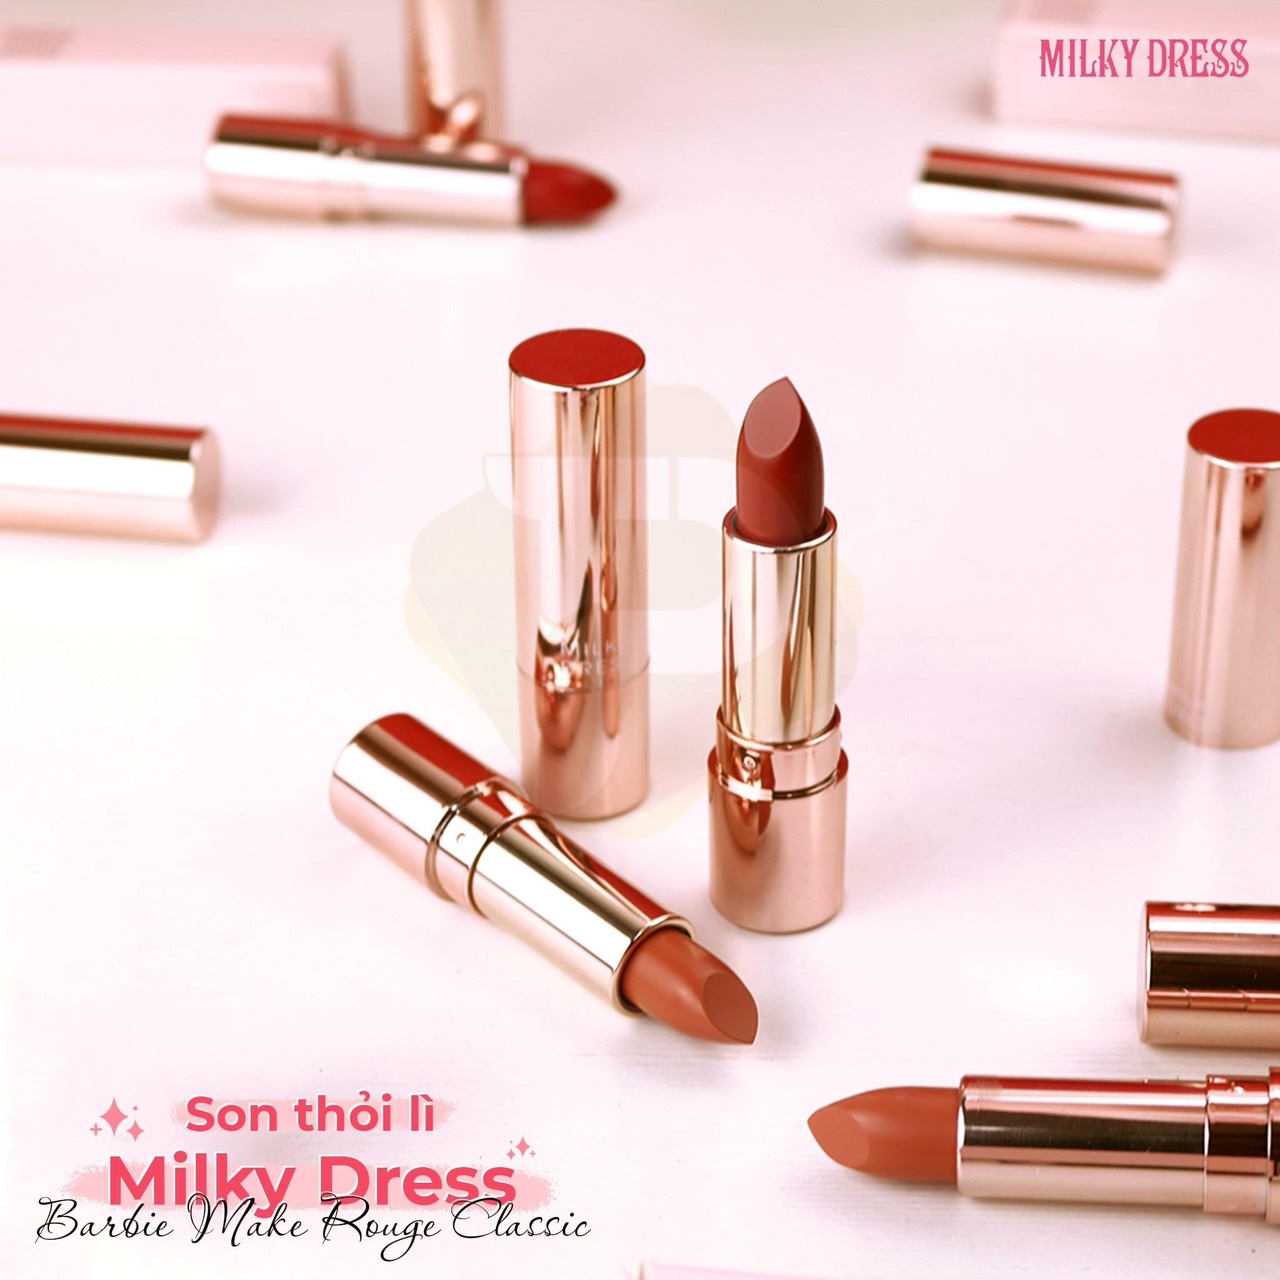 Milky Dress - Son lì Barbie Make Rouge Classic M235